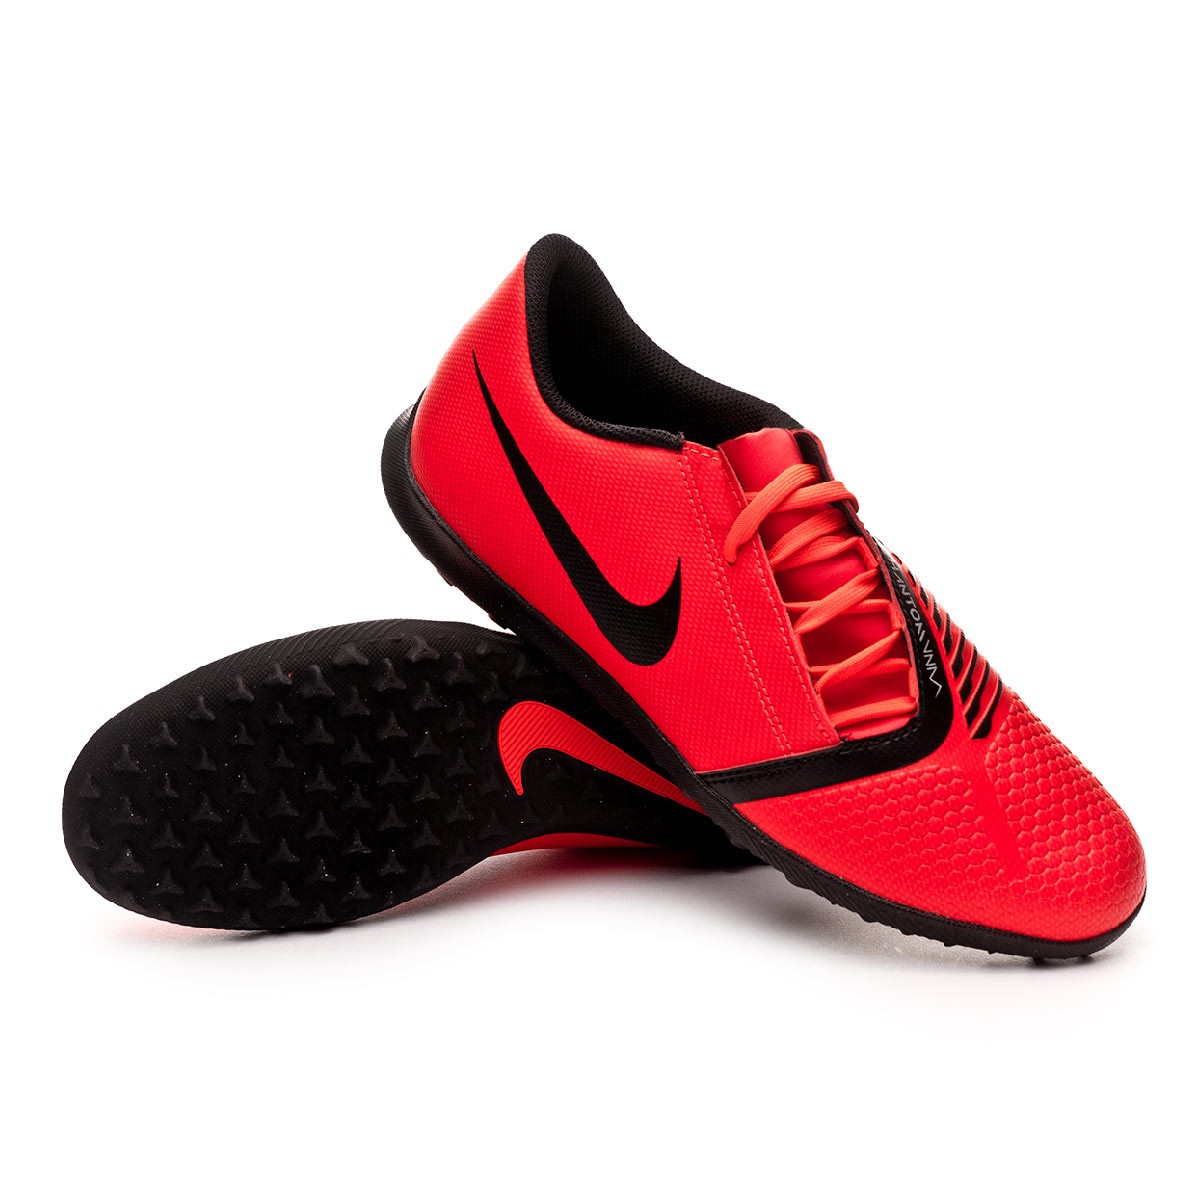 Nike Phantom Venom Pro Firm Ground Football Boots Red